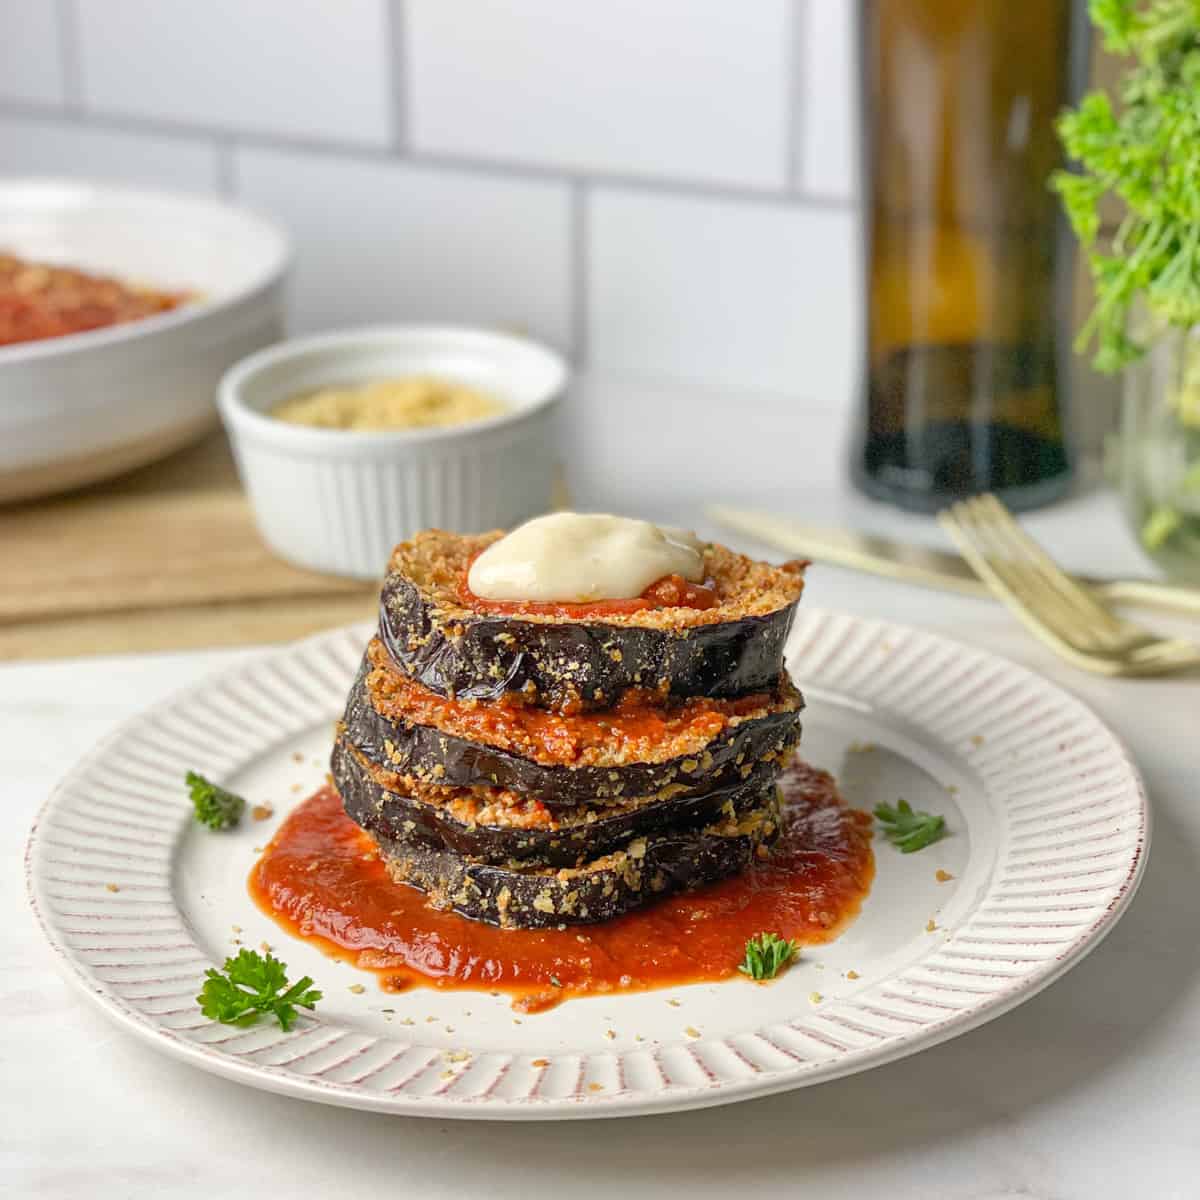 Vegan Eggplant Parmigiana (Air Fryer) - The Dairy-Free Menu